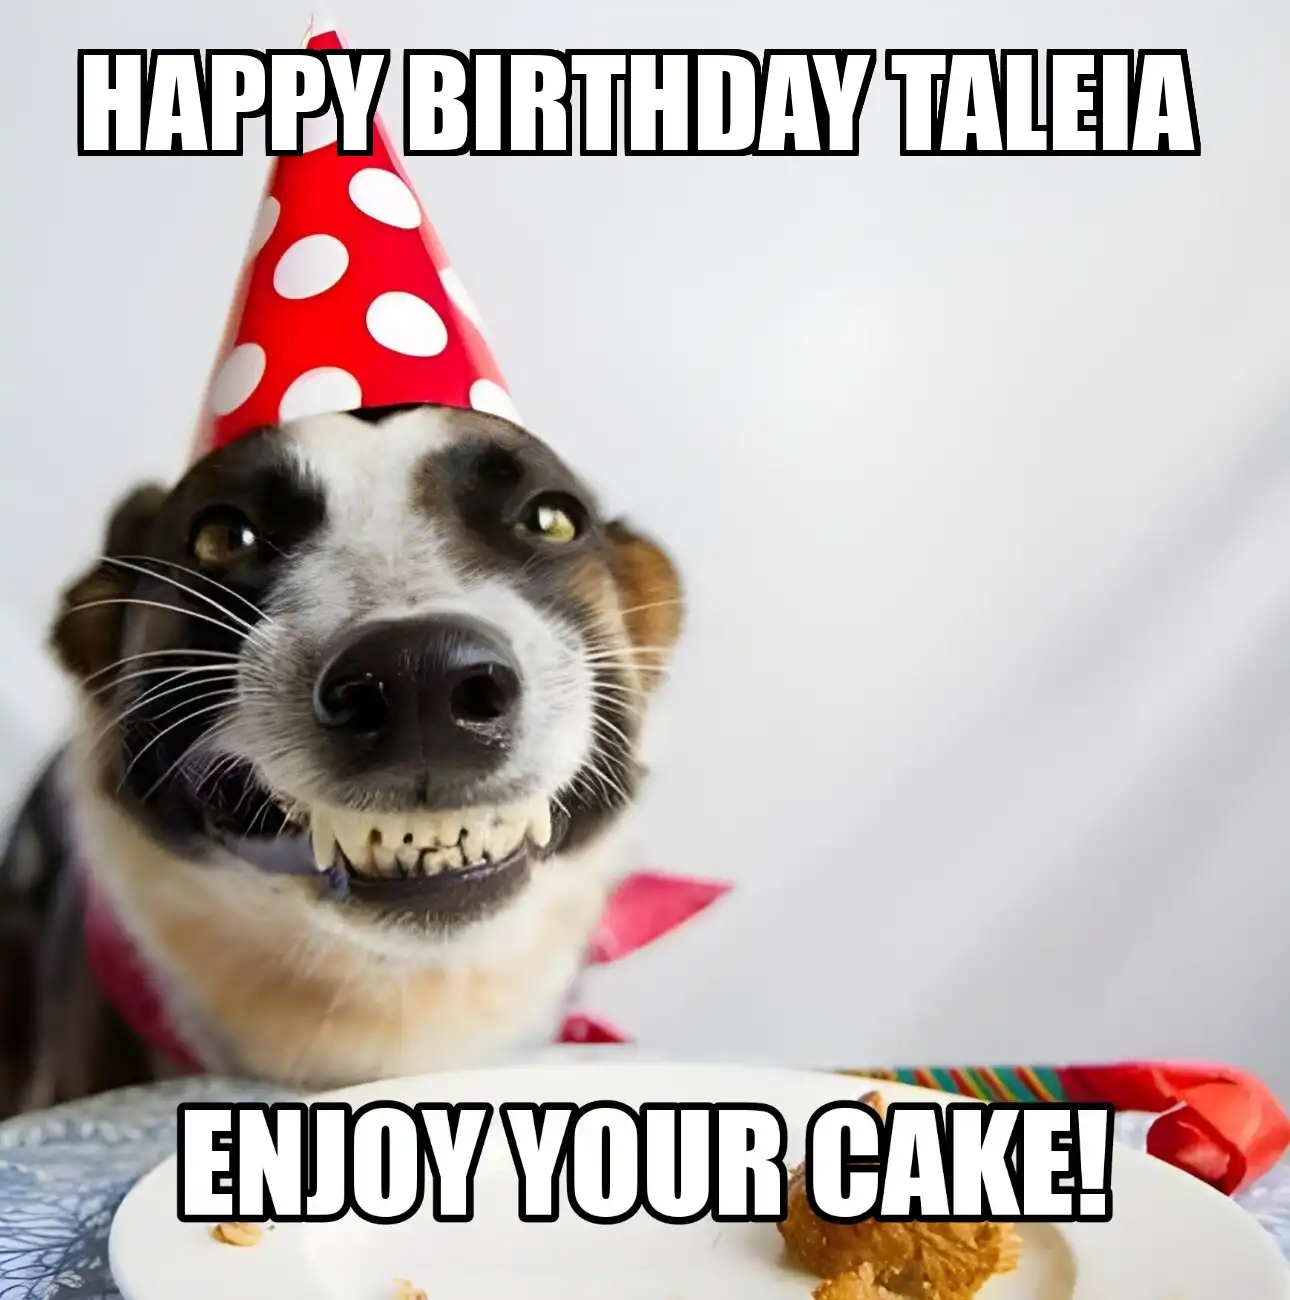 Happy Birthday Taleia Enjoy Your Cake Dog Meme